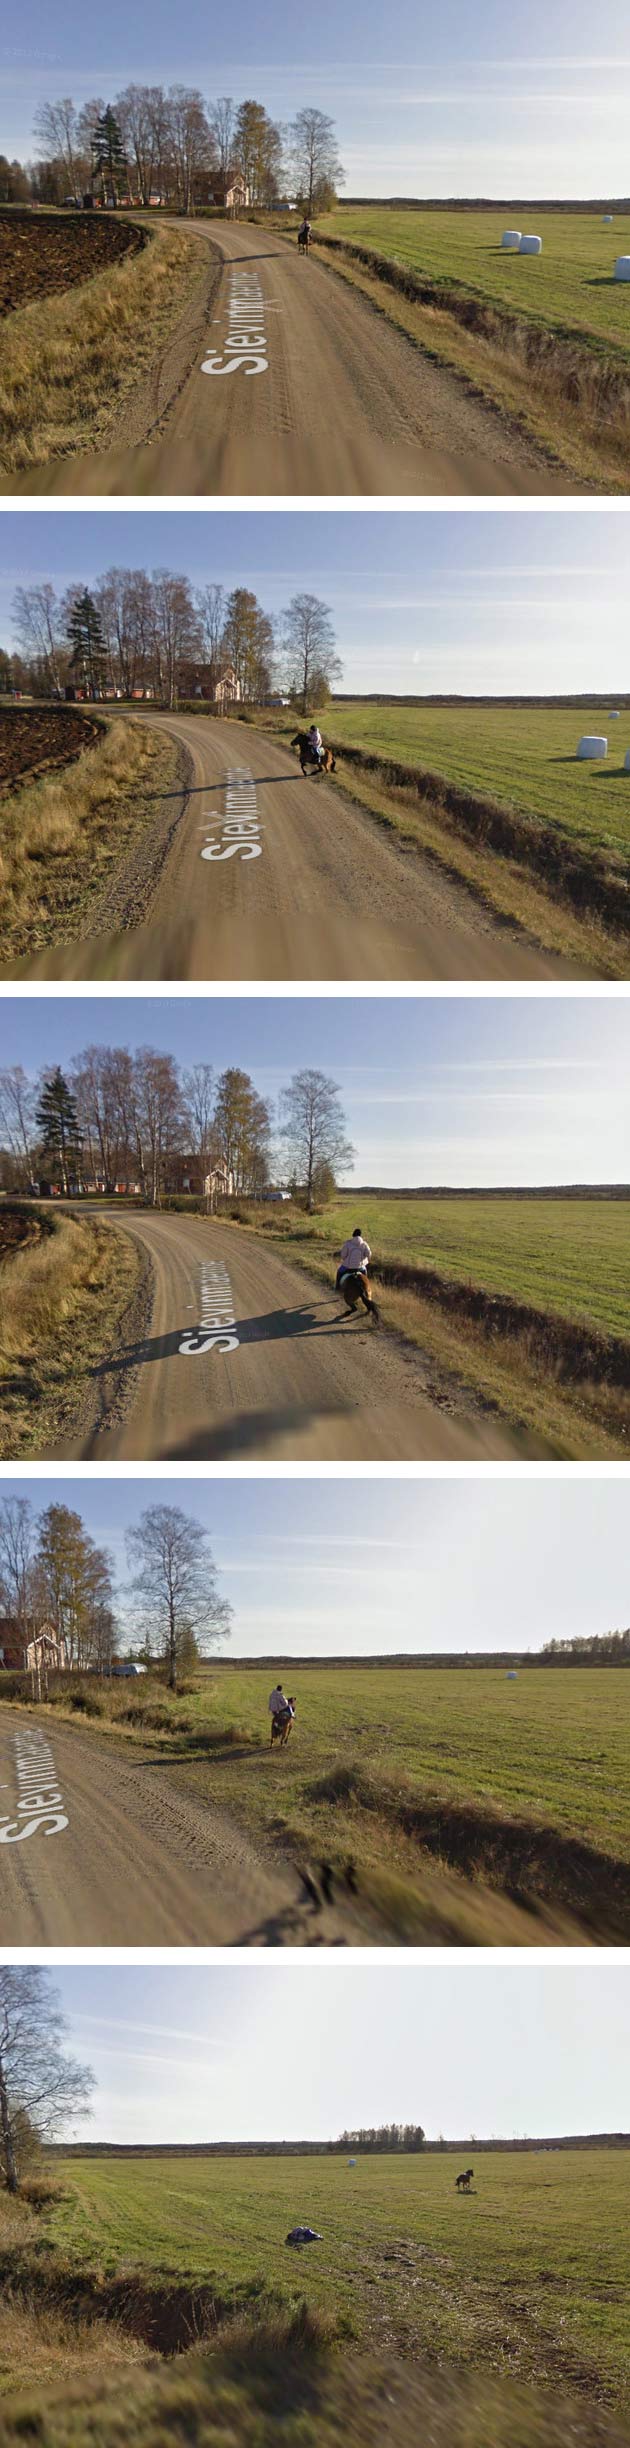 When Google Street View car meets a horse